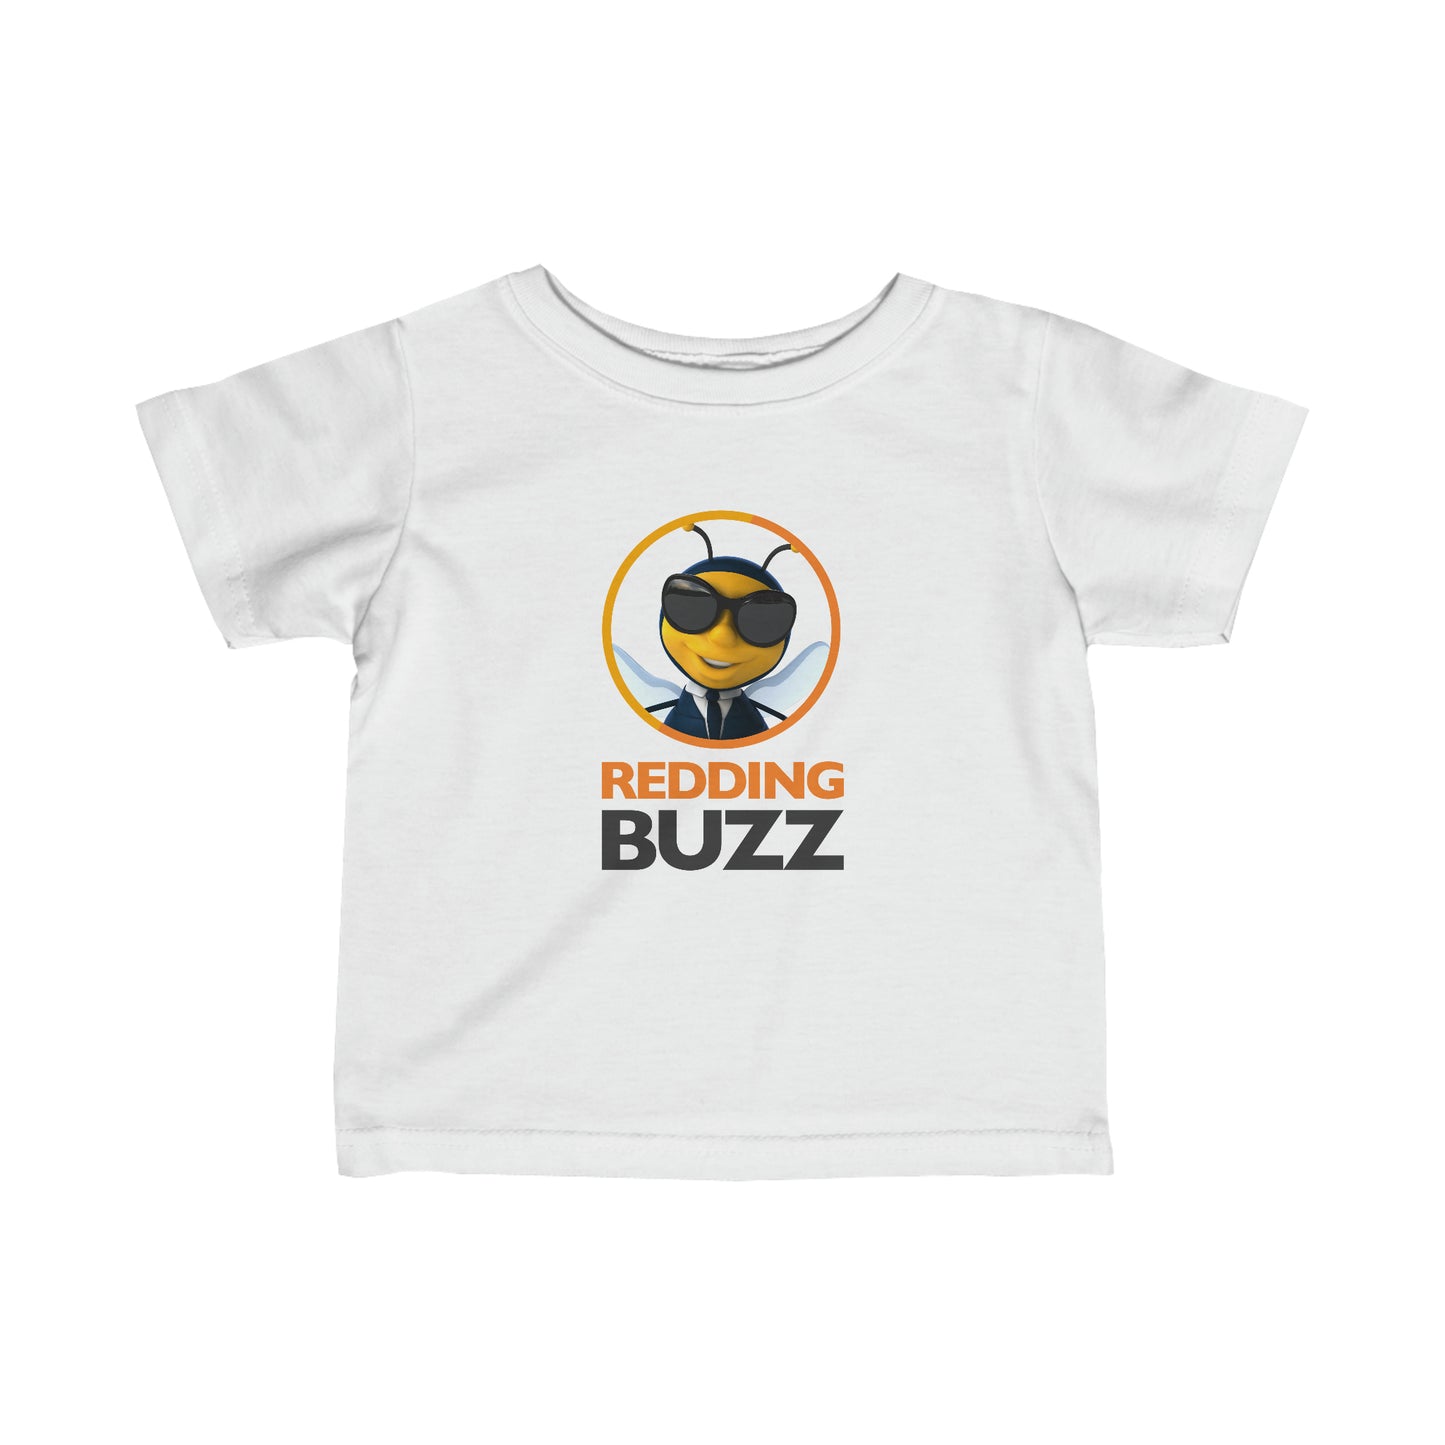 Tiny Tot Jersey Tee: Soft & Sturdy Infant Shirt (6M-24M)